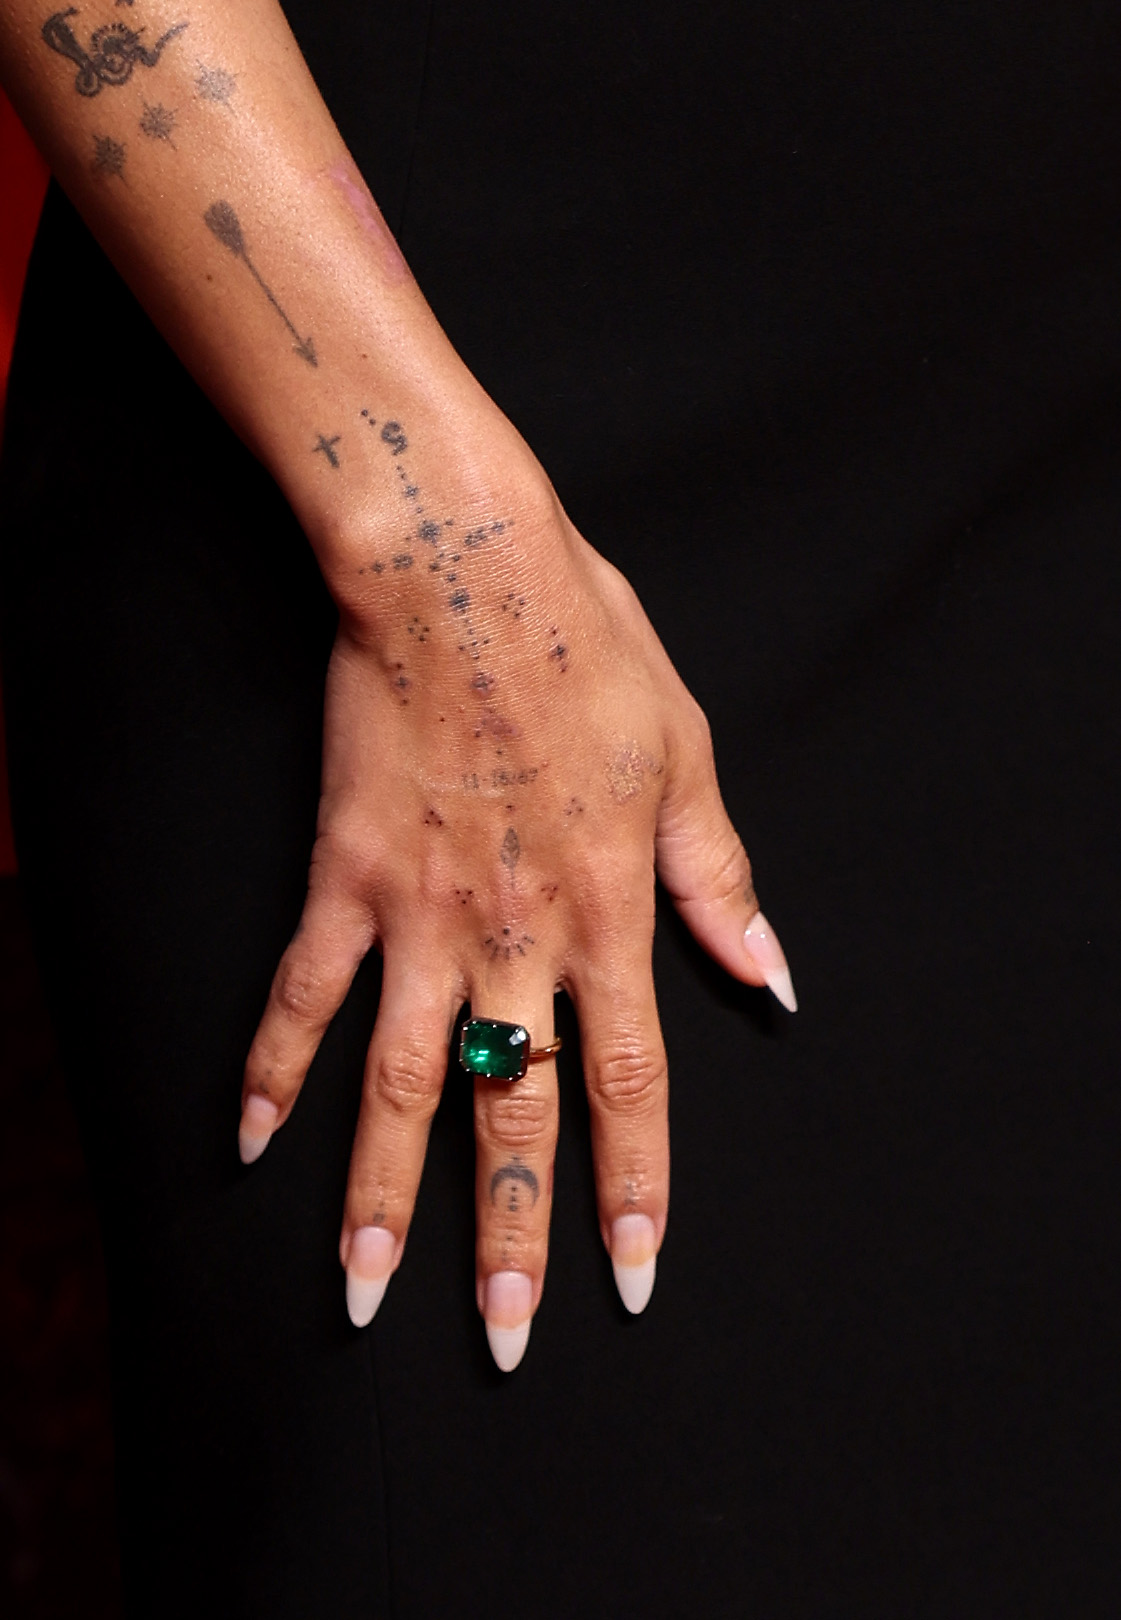 Celebrity Tattoos Miley Cyrus Ed Sheeran Rihanna  More Get Inked   Billboard